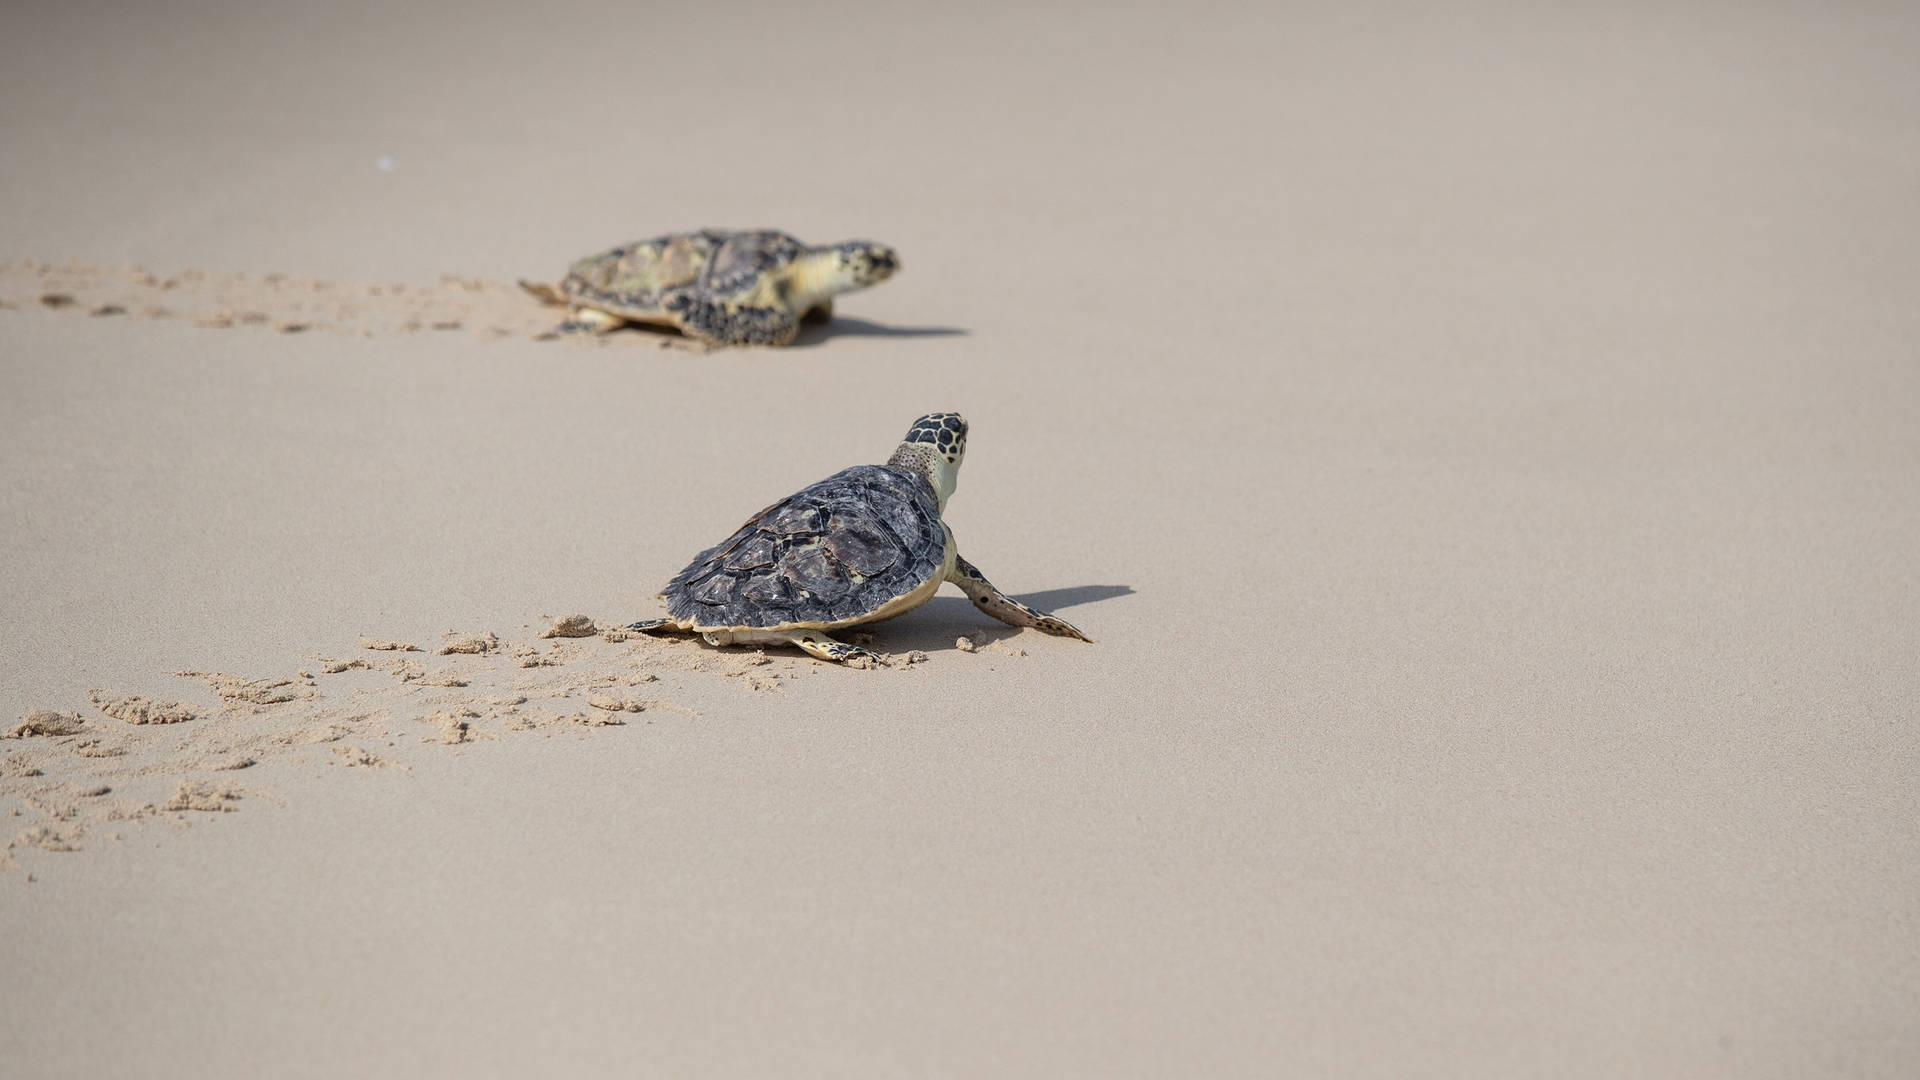 Turtles on a beach